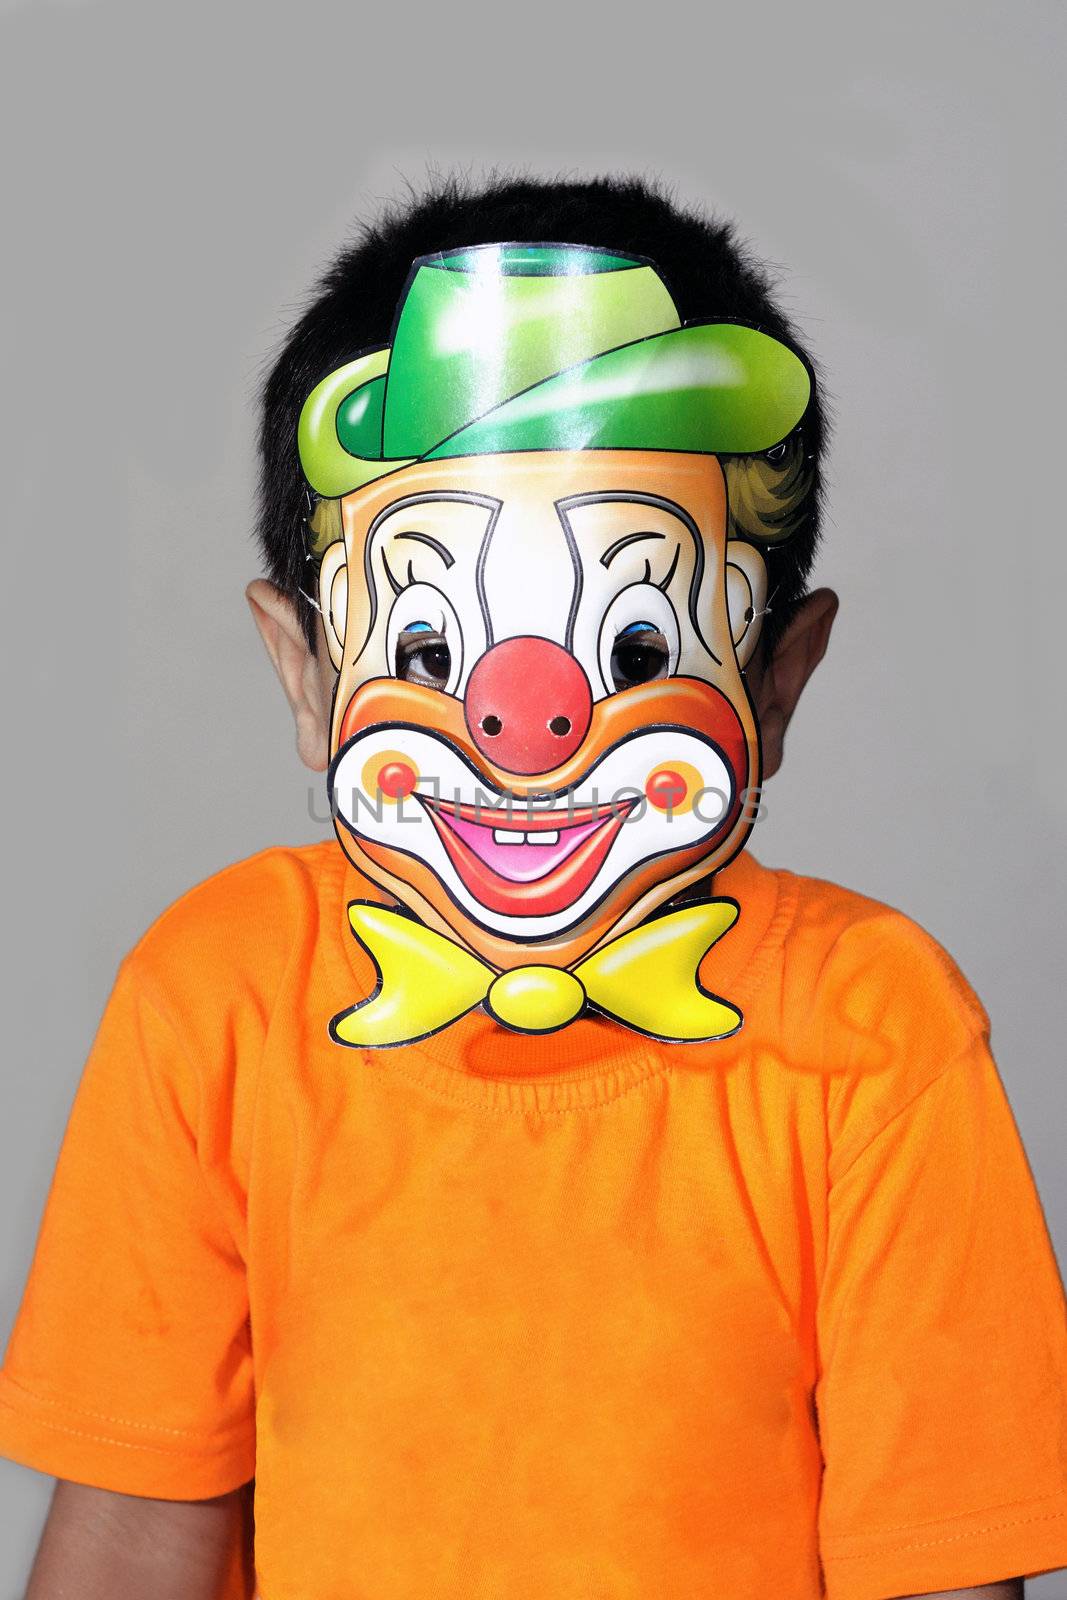 A kindergarten kid wearing a clown mask